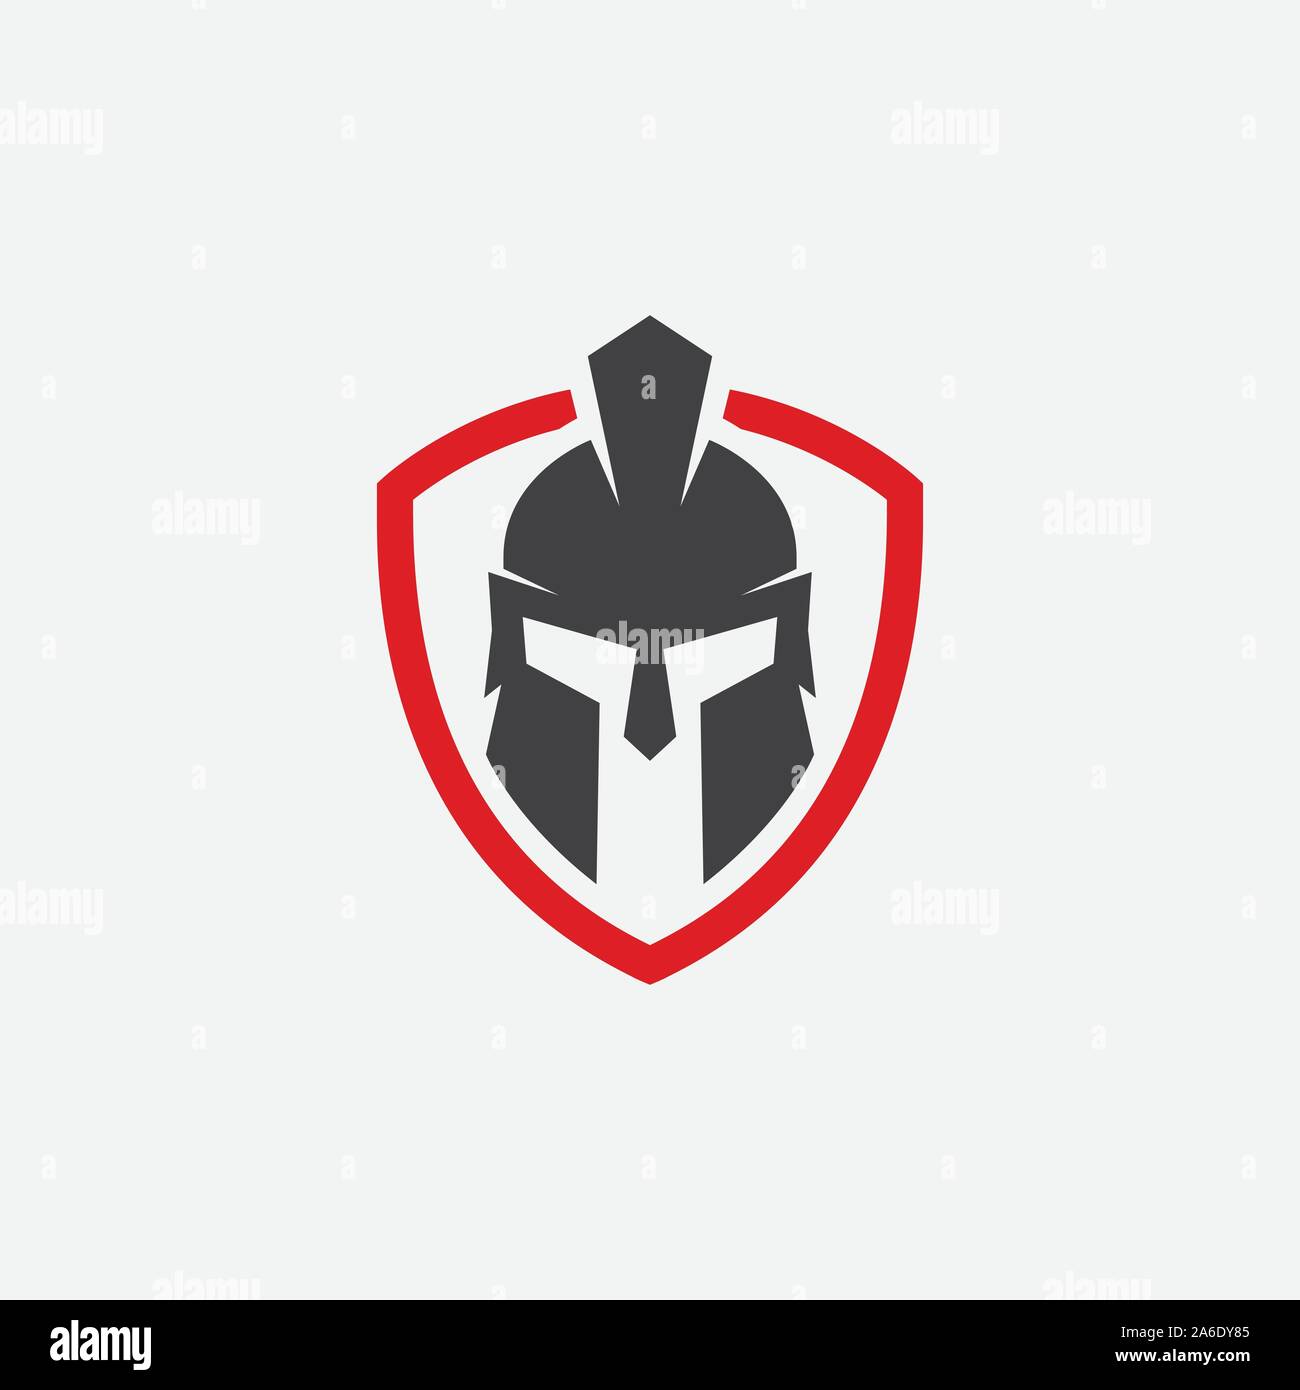 https://c8.alamy.com/comp/2A6DY85/shield-and-helmet-of-the-spartan-warrior-symbol-emblem-spartan-helmet-logo-vector-illustration-of-spartan-shield-and-helm-spartan-greek-gladiator-helmet-armor-flat-vector-icon-2A6DY85.jpg